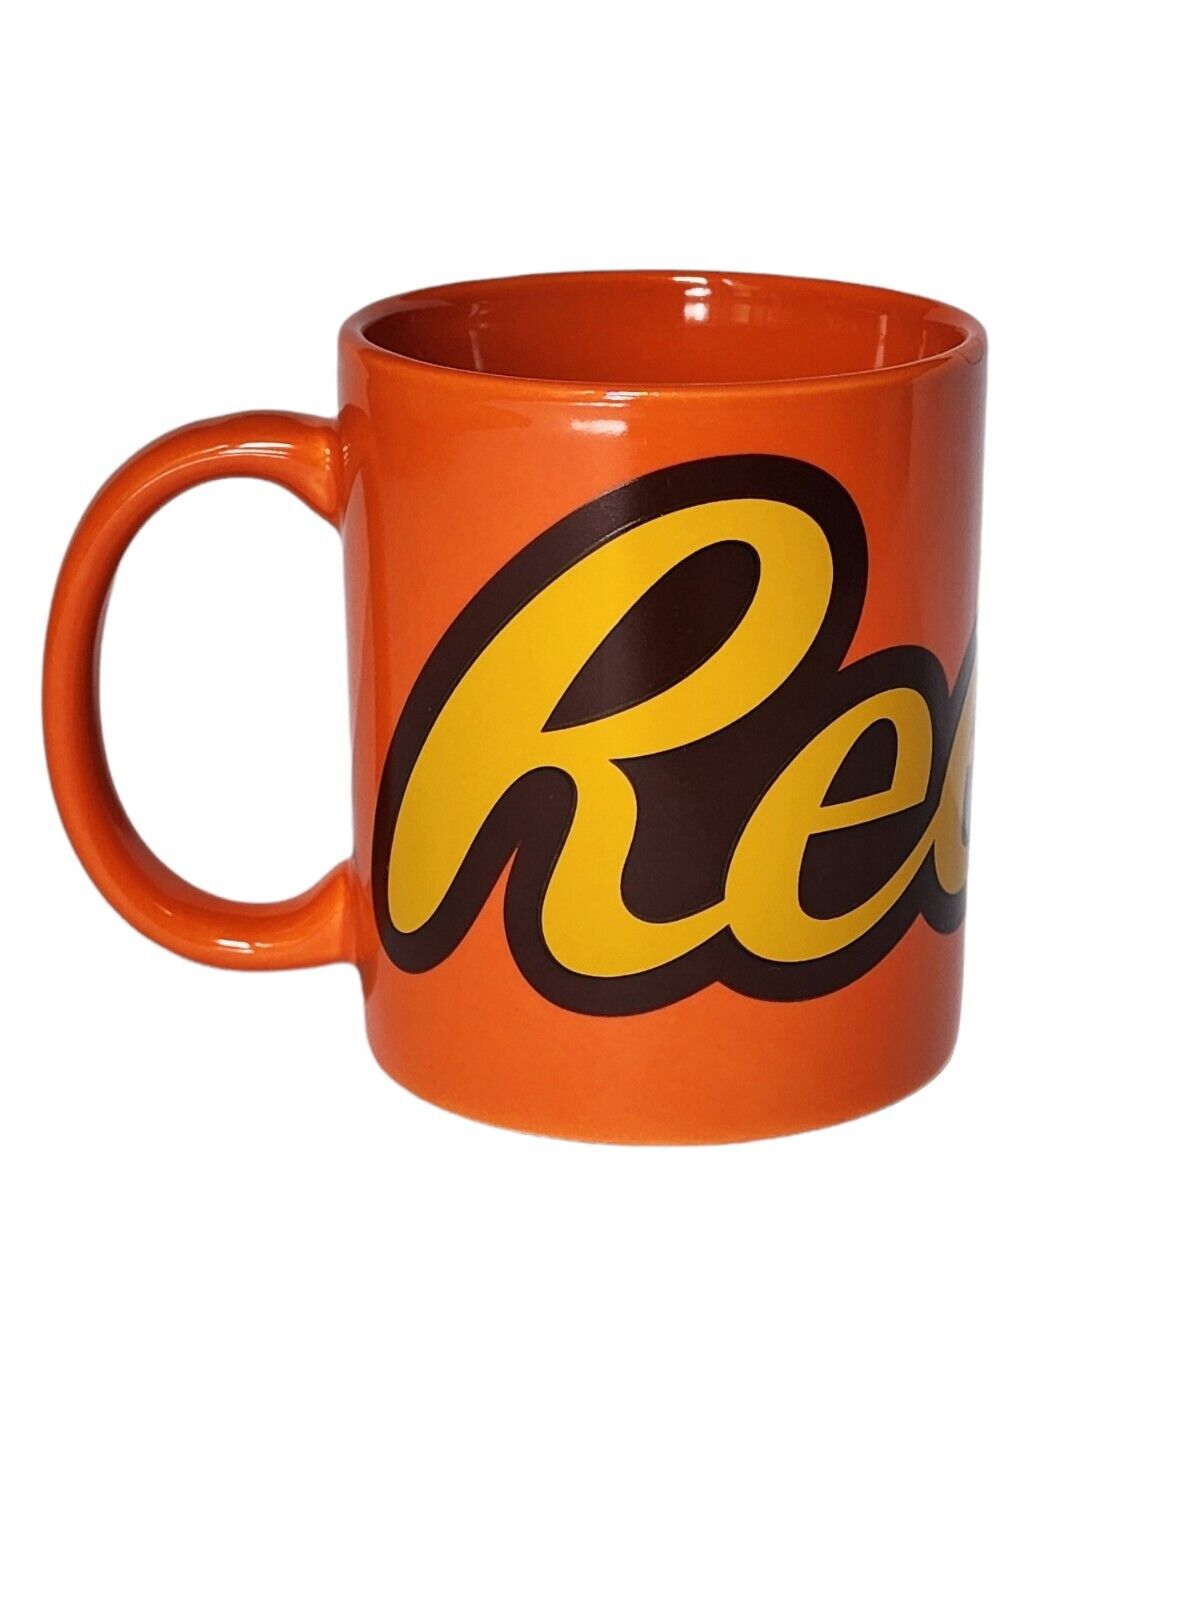 Reese's Candy Coffee Cocoa Mug  Orange Brown Yellow